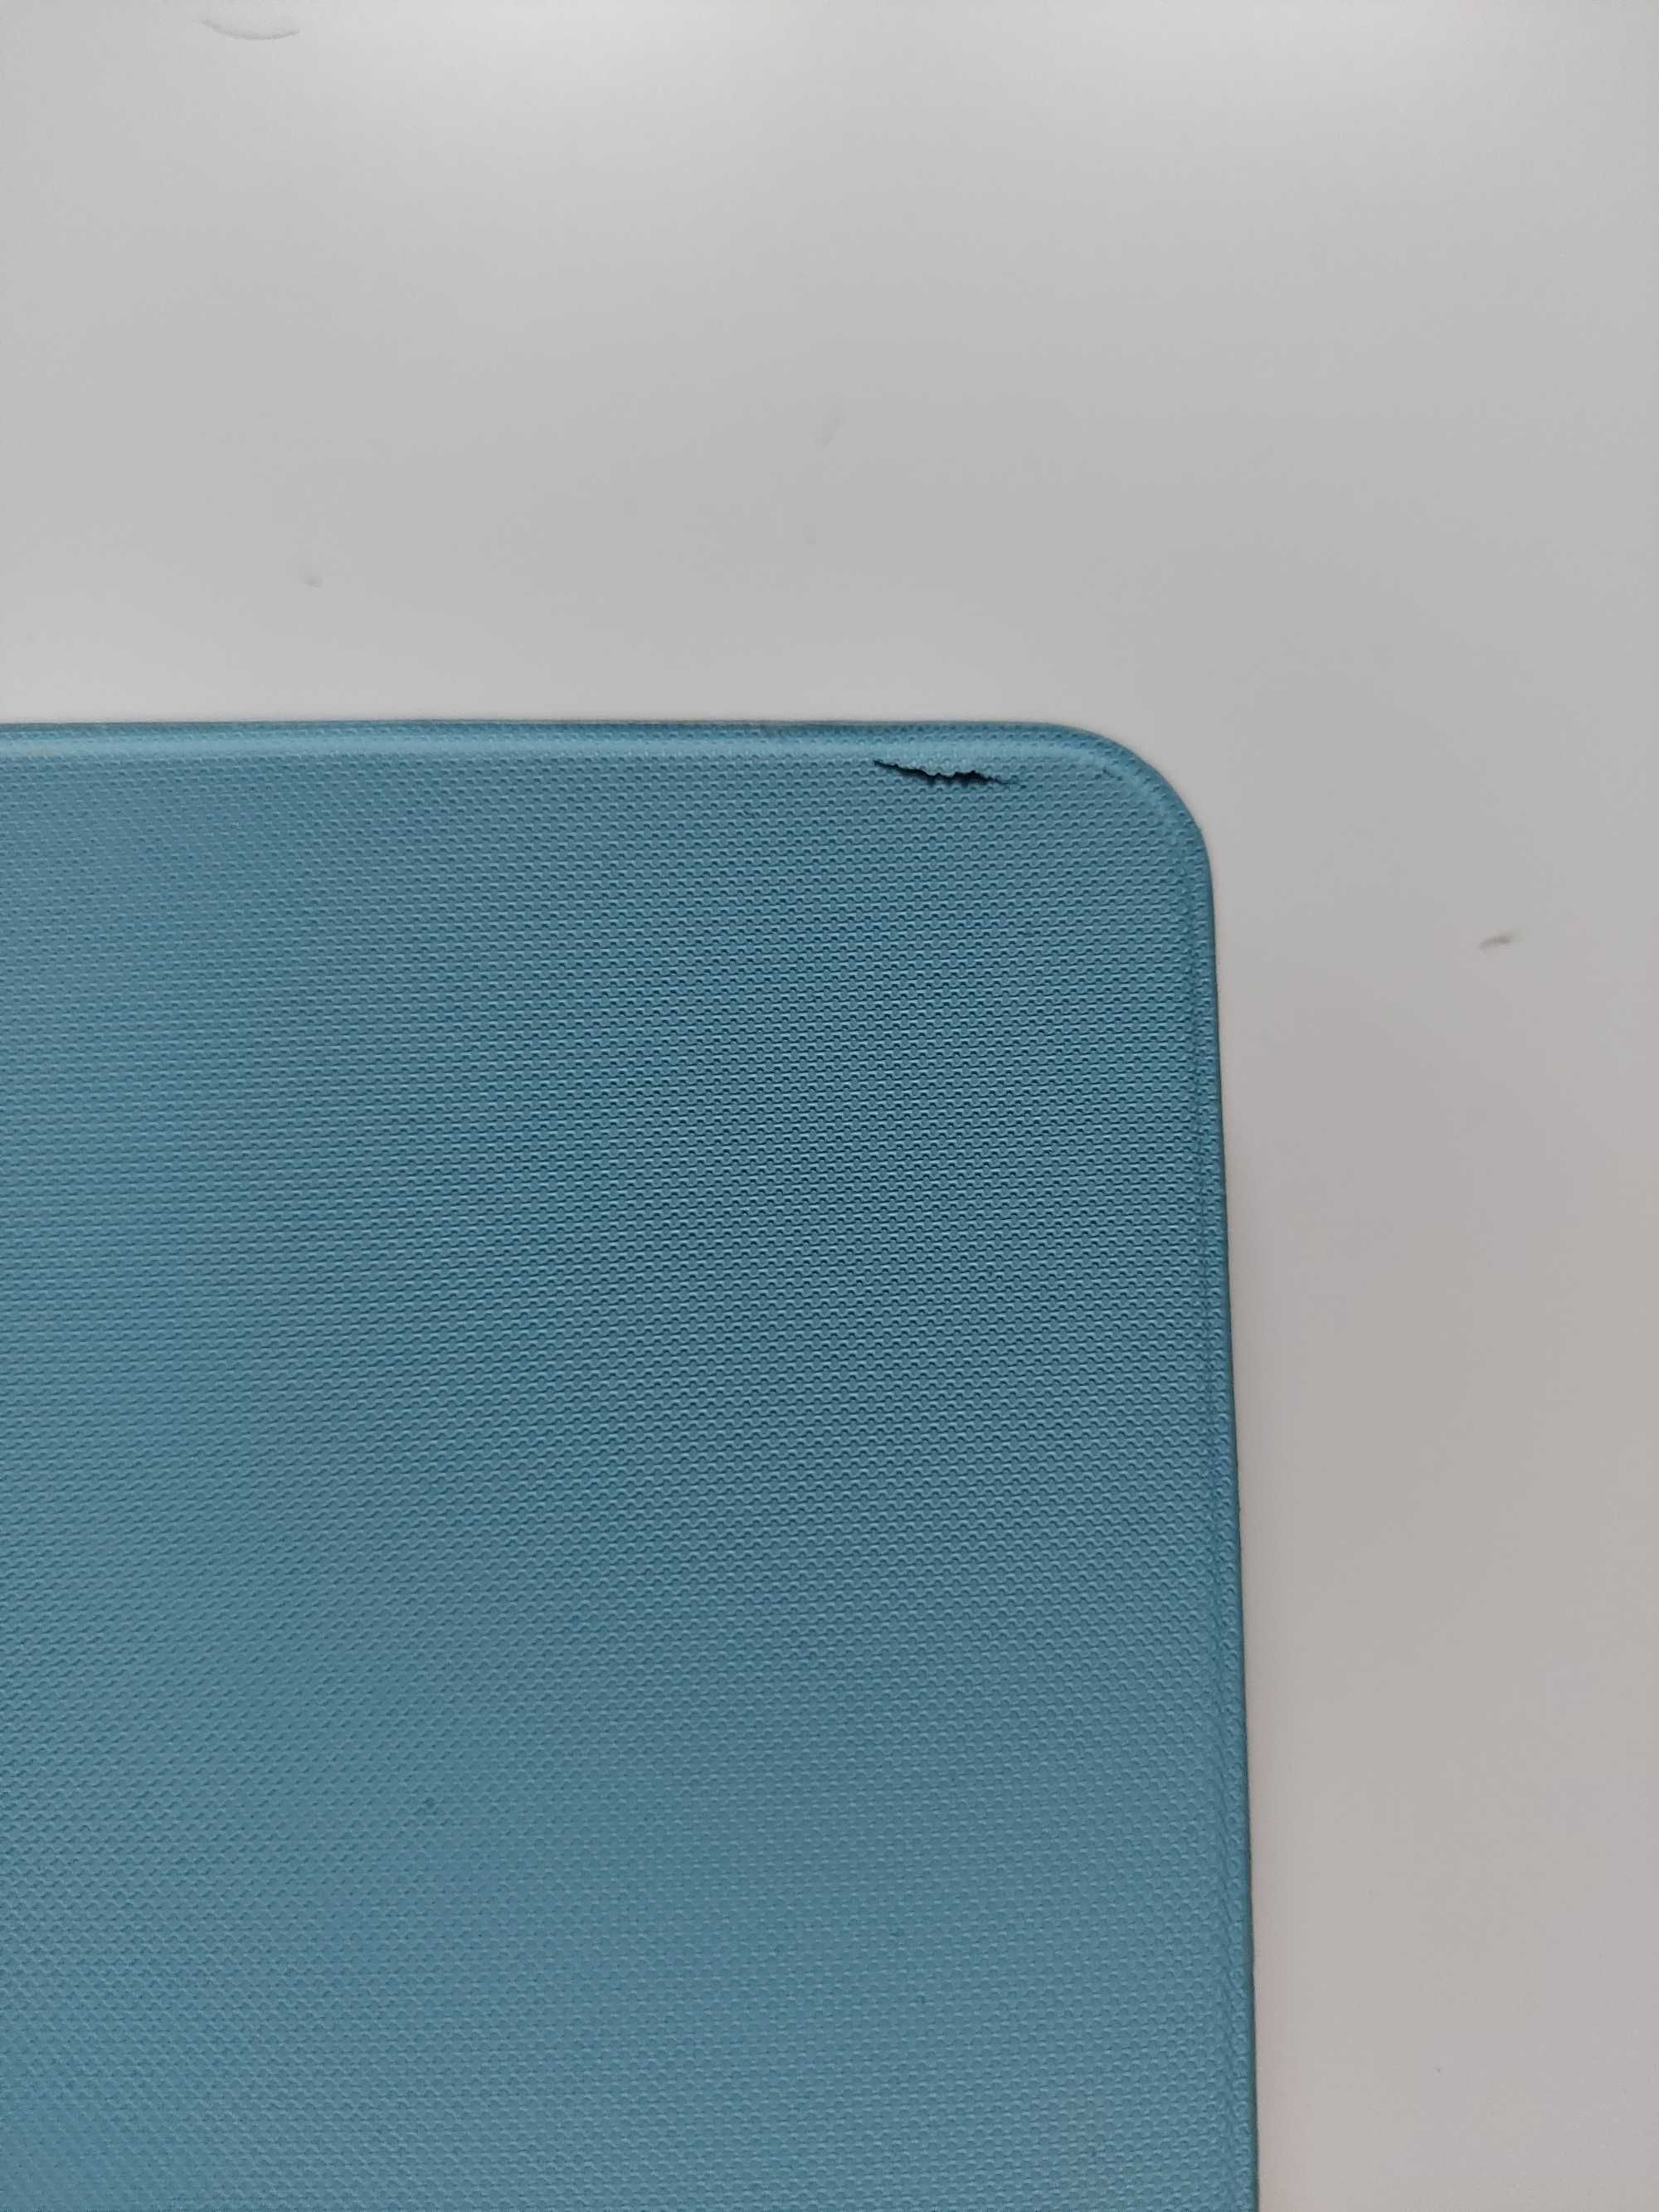 Samsung Galaxy Tab S6 Lite Niebieski + oryginalne etui